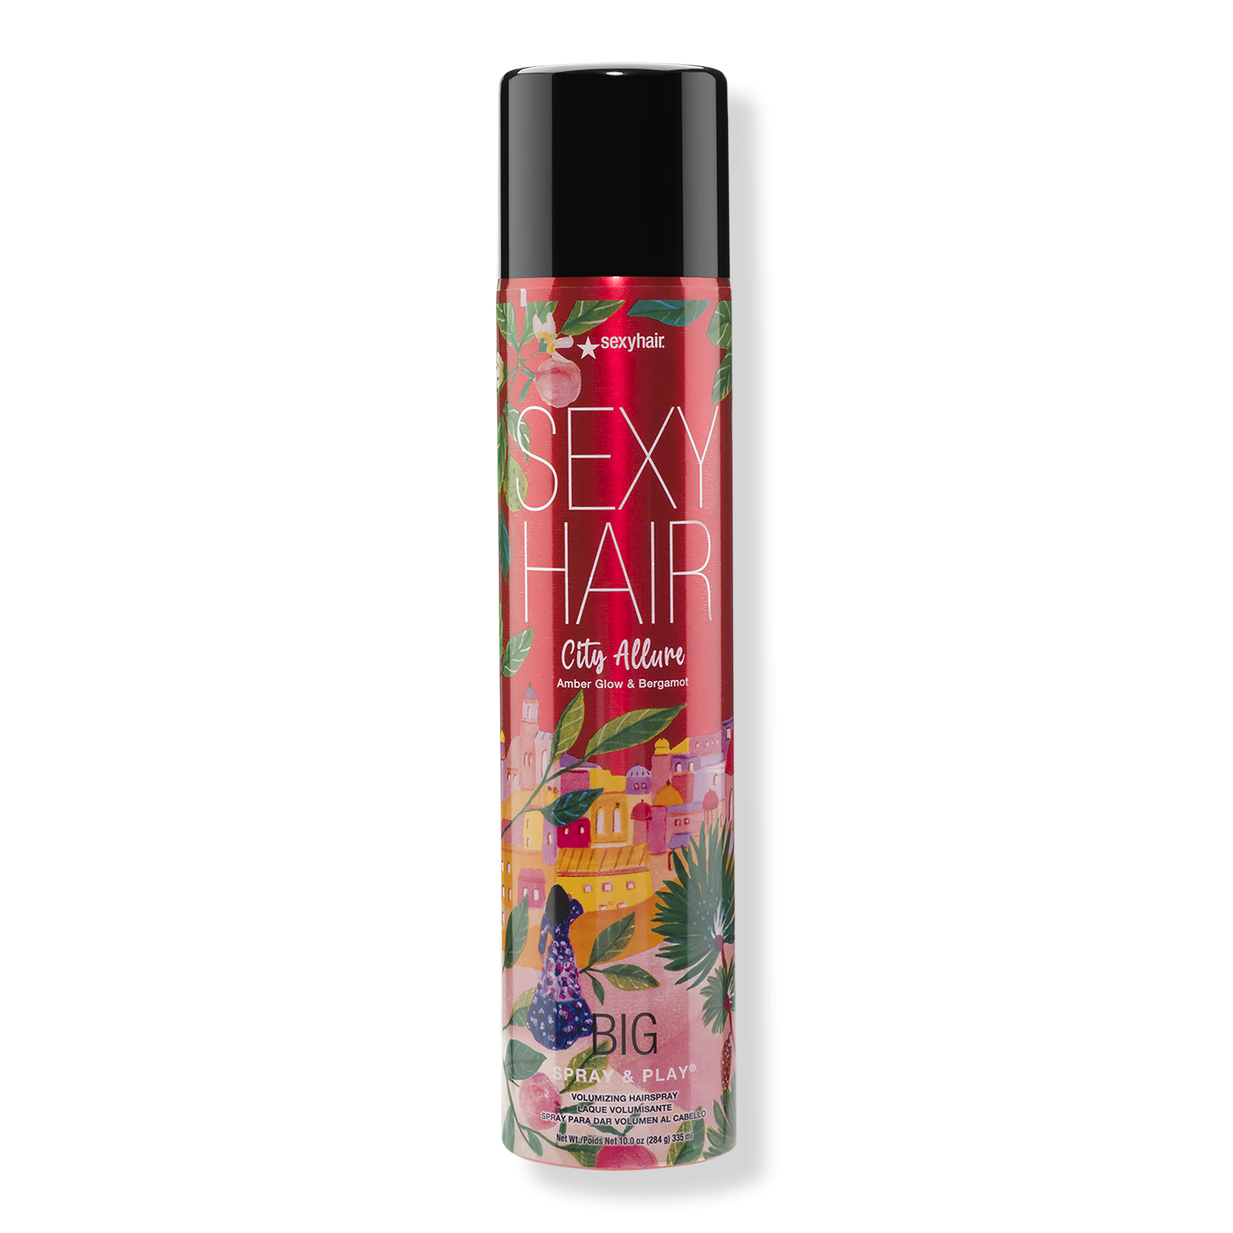 Big SexyHair Spray & Play City Allure Volumizing Hairspray with Bergamot +  Amber Glow - Sexy Hair | Ulta Beauty